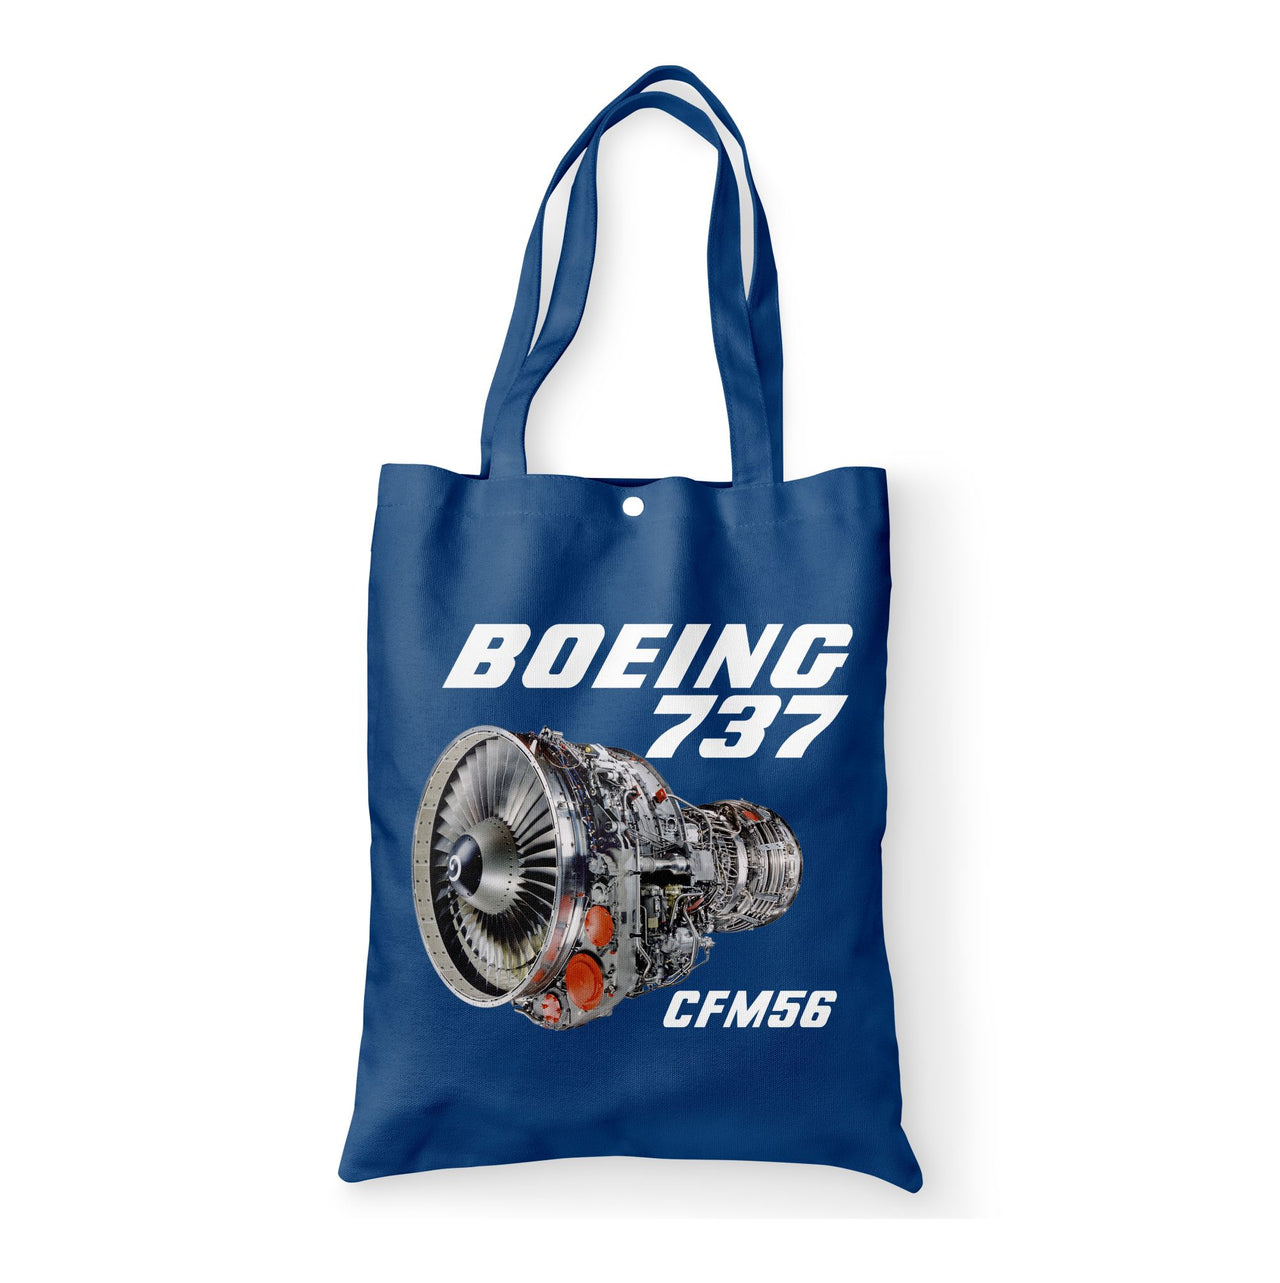 Boeing 737 Engine & CFM56 Designed Tote Bags